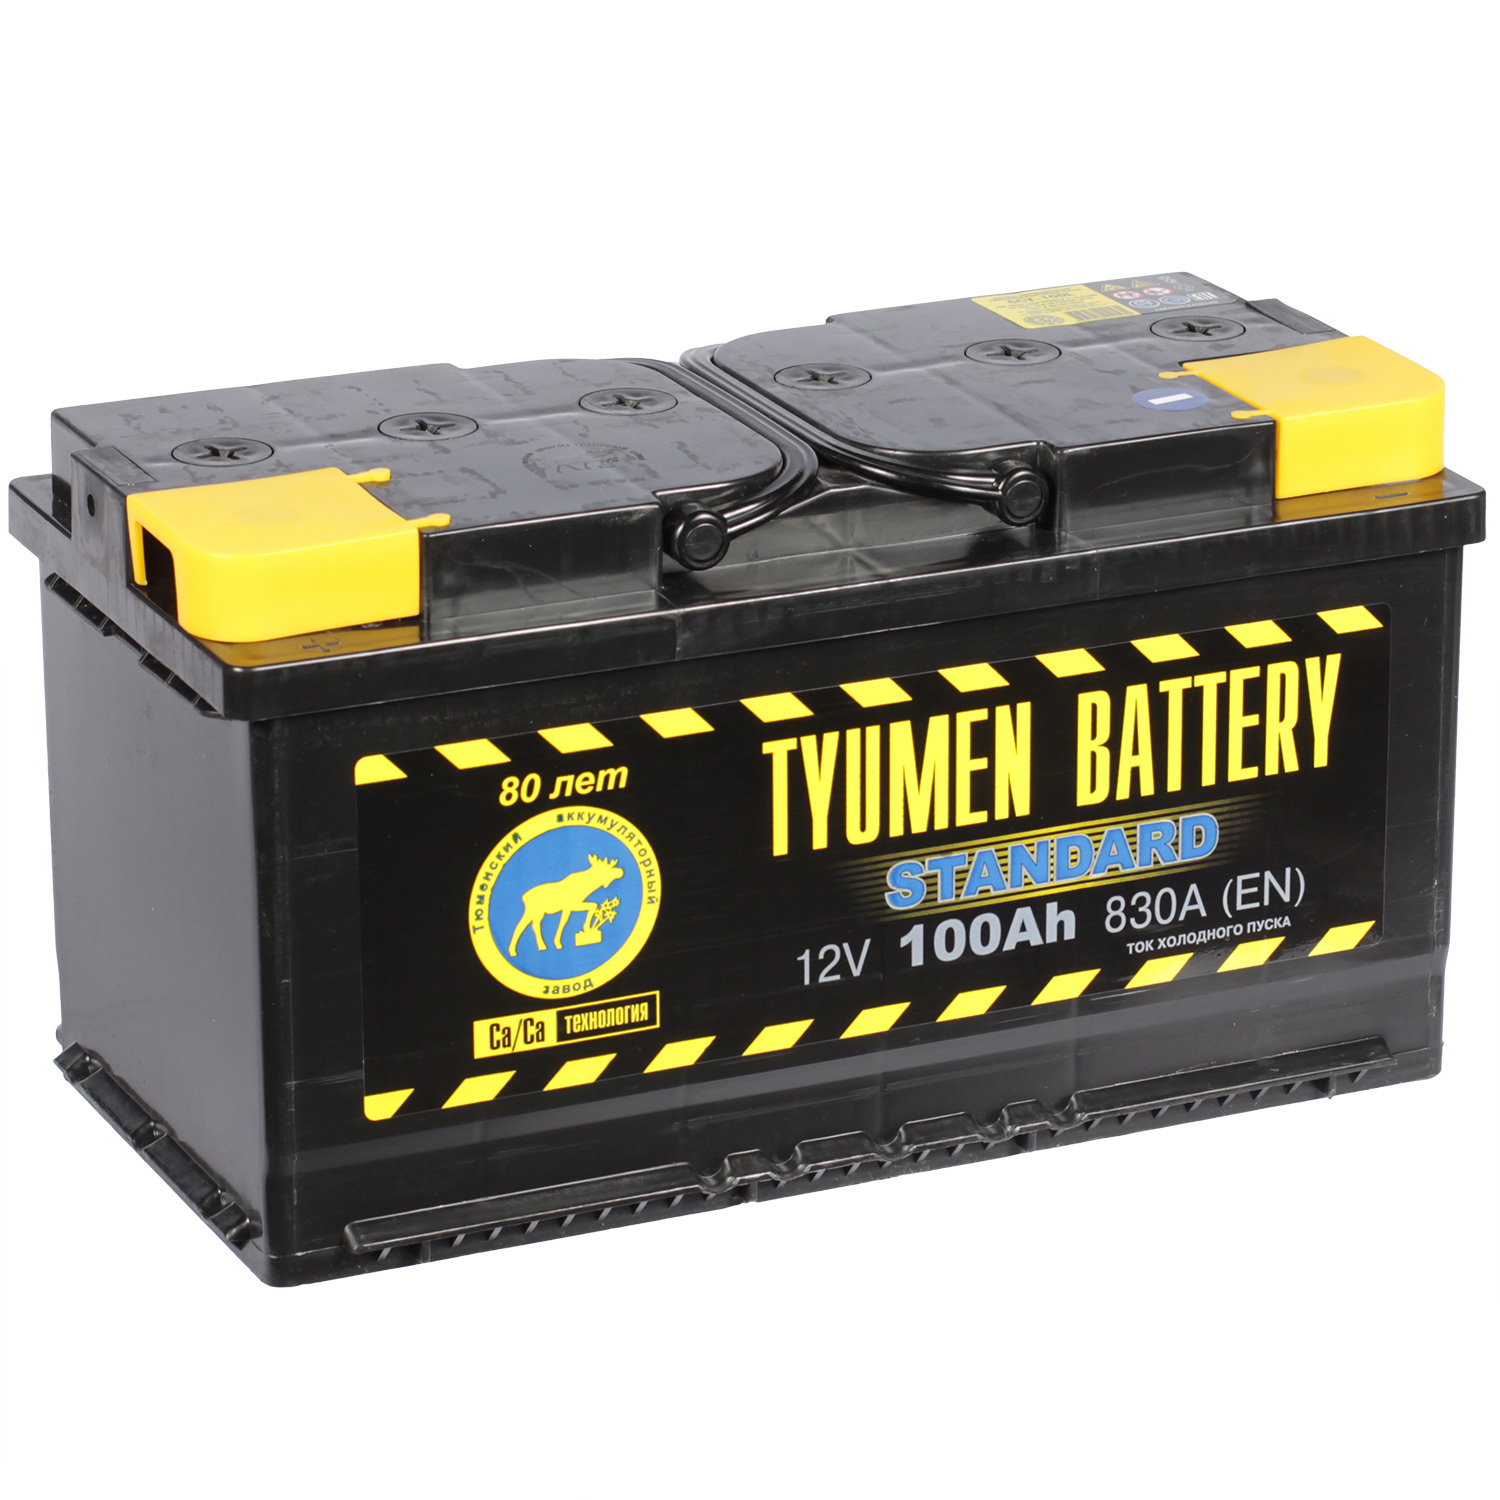 Tyumen Battery Автомобильный аккумулятор Tyumen Battery Standard 100 Ач прямая полярность L5 tyumen battery автомобильный аккумулятор tyumen battery 95 ач прямая полярность d31r